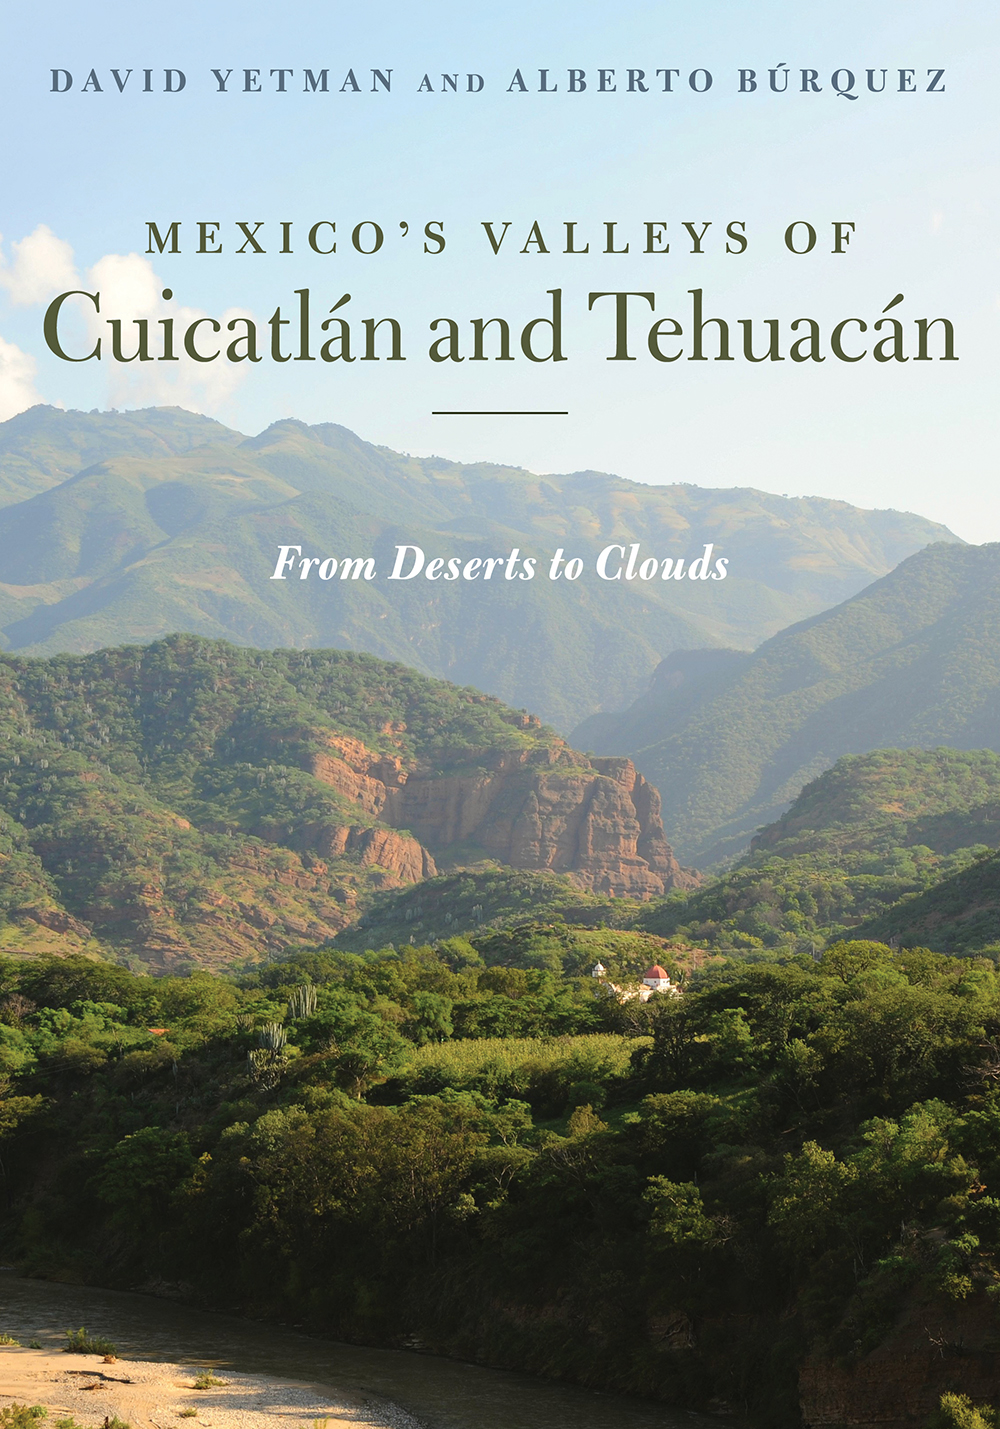 Mexico’s Valleys of Cuicatlán and Tehuacán